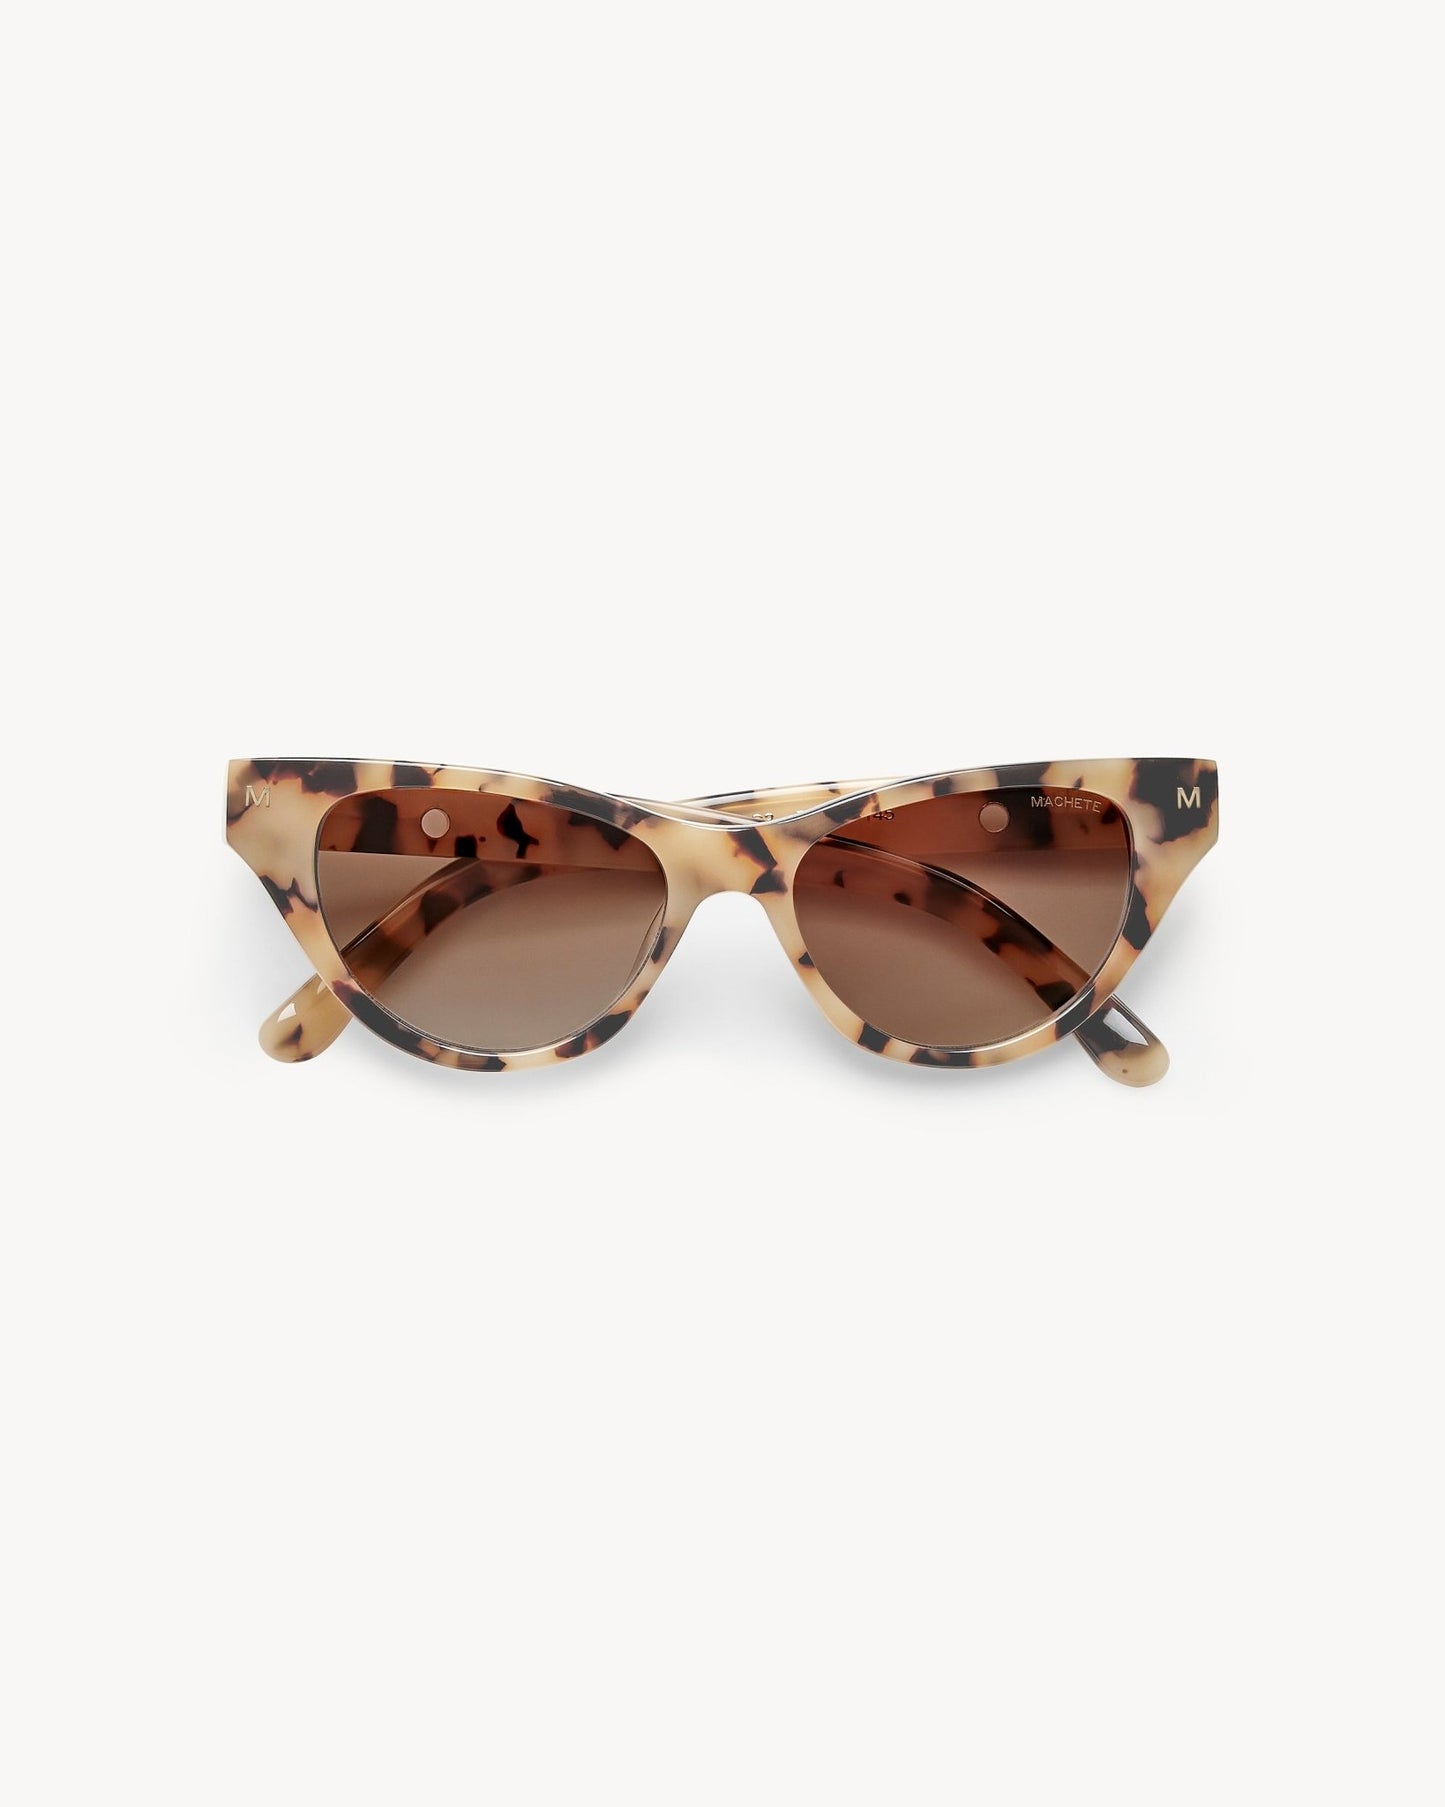 MACHETE Suzy Sunglasses in Blonde Tortoise